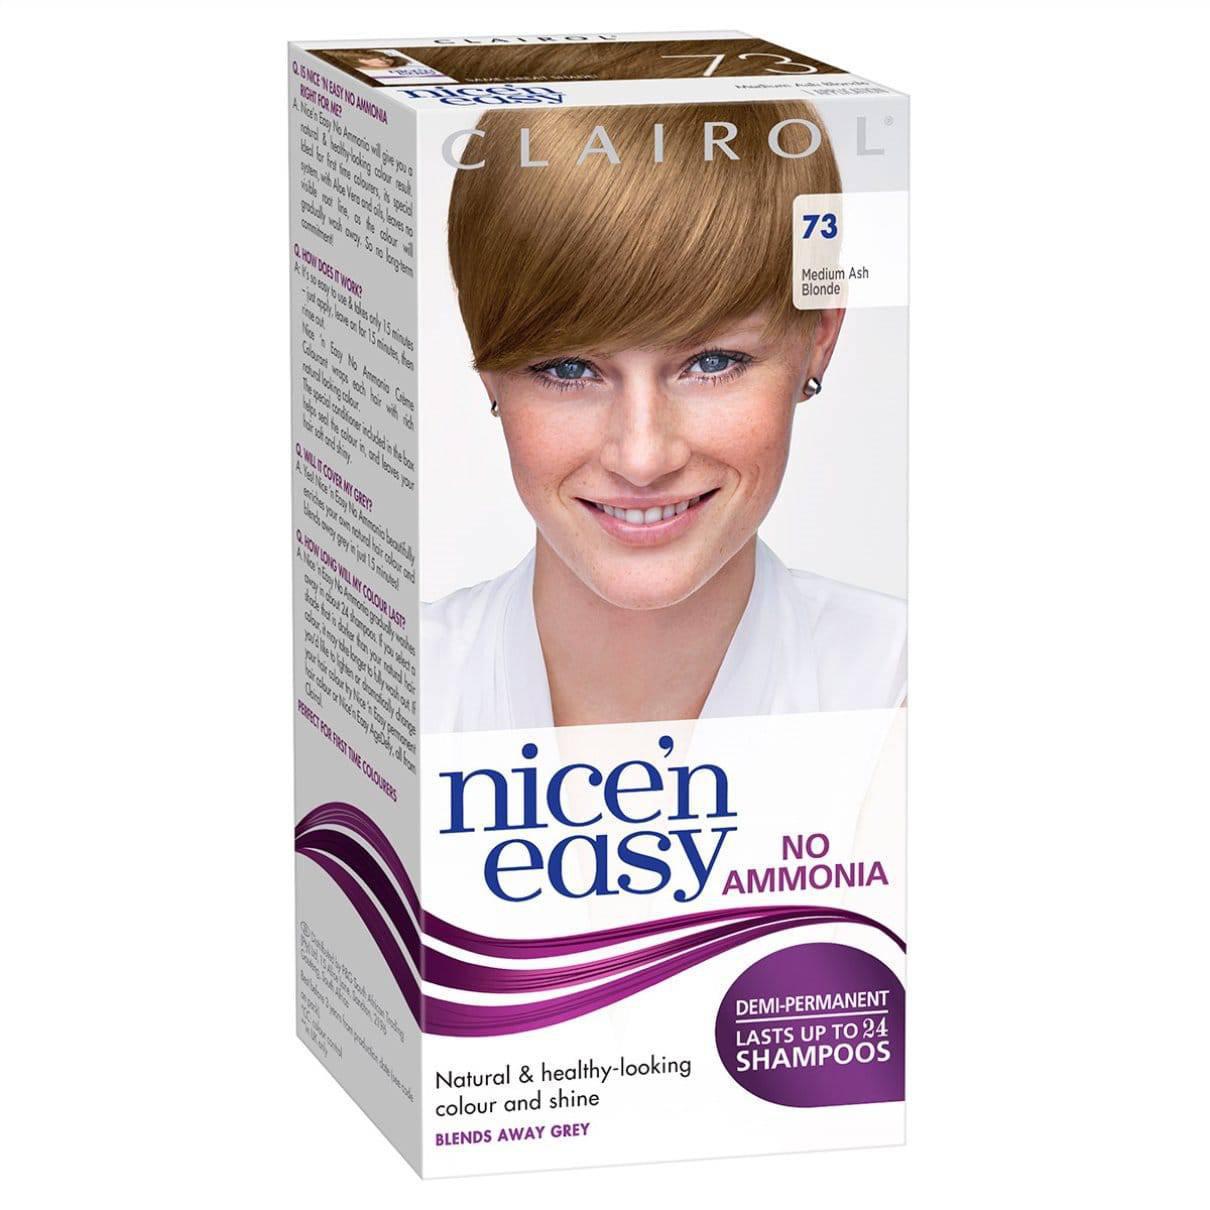 Clairol Nice N Easy No Ammonia Semi-Permanent Hair Dye - 73 Medium Ash Blonde